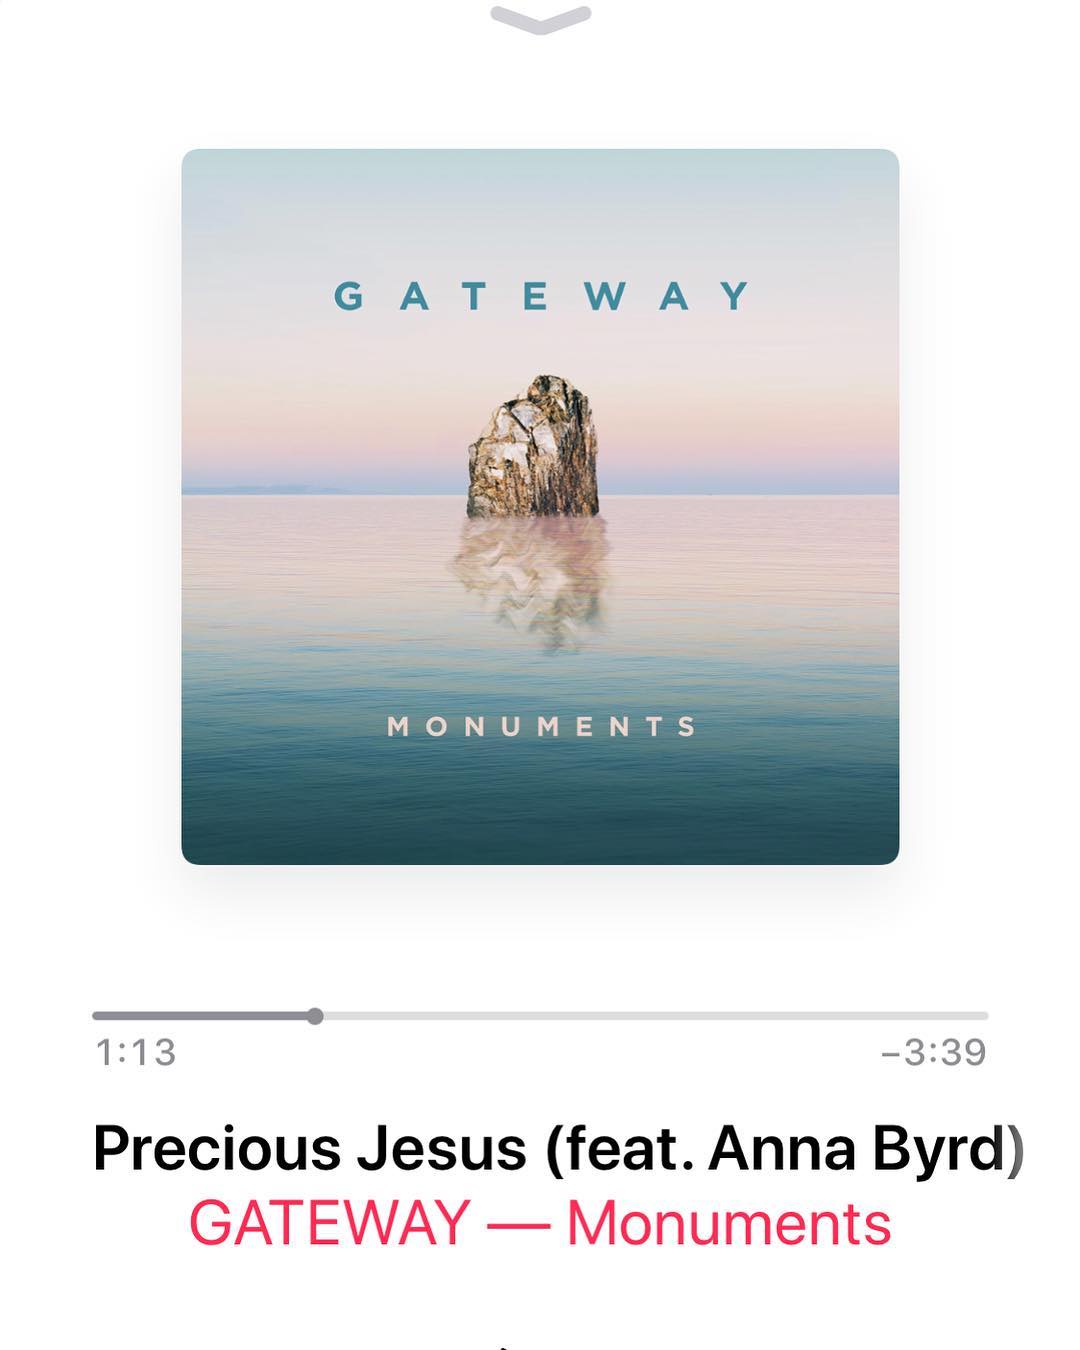 Check out gateways new album. Song “Precious Jesus”